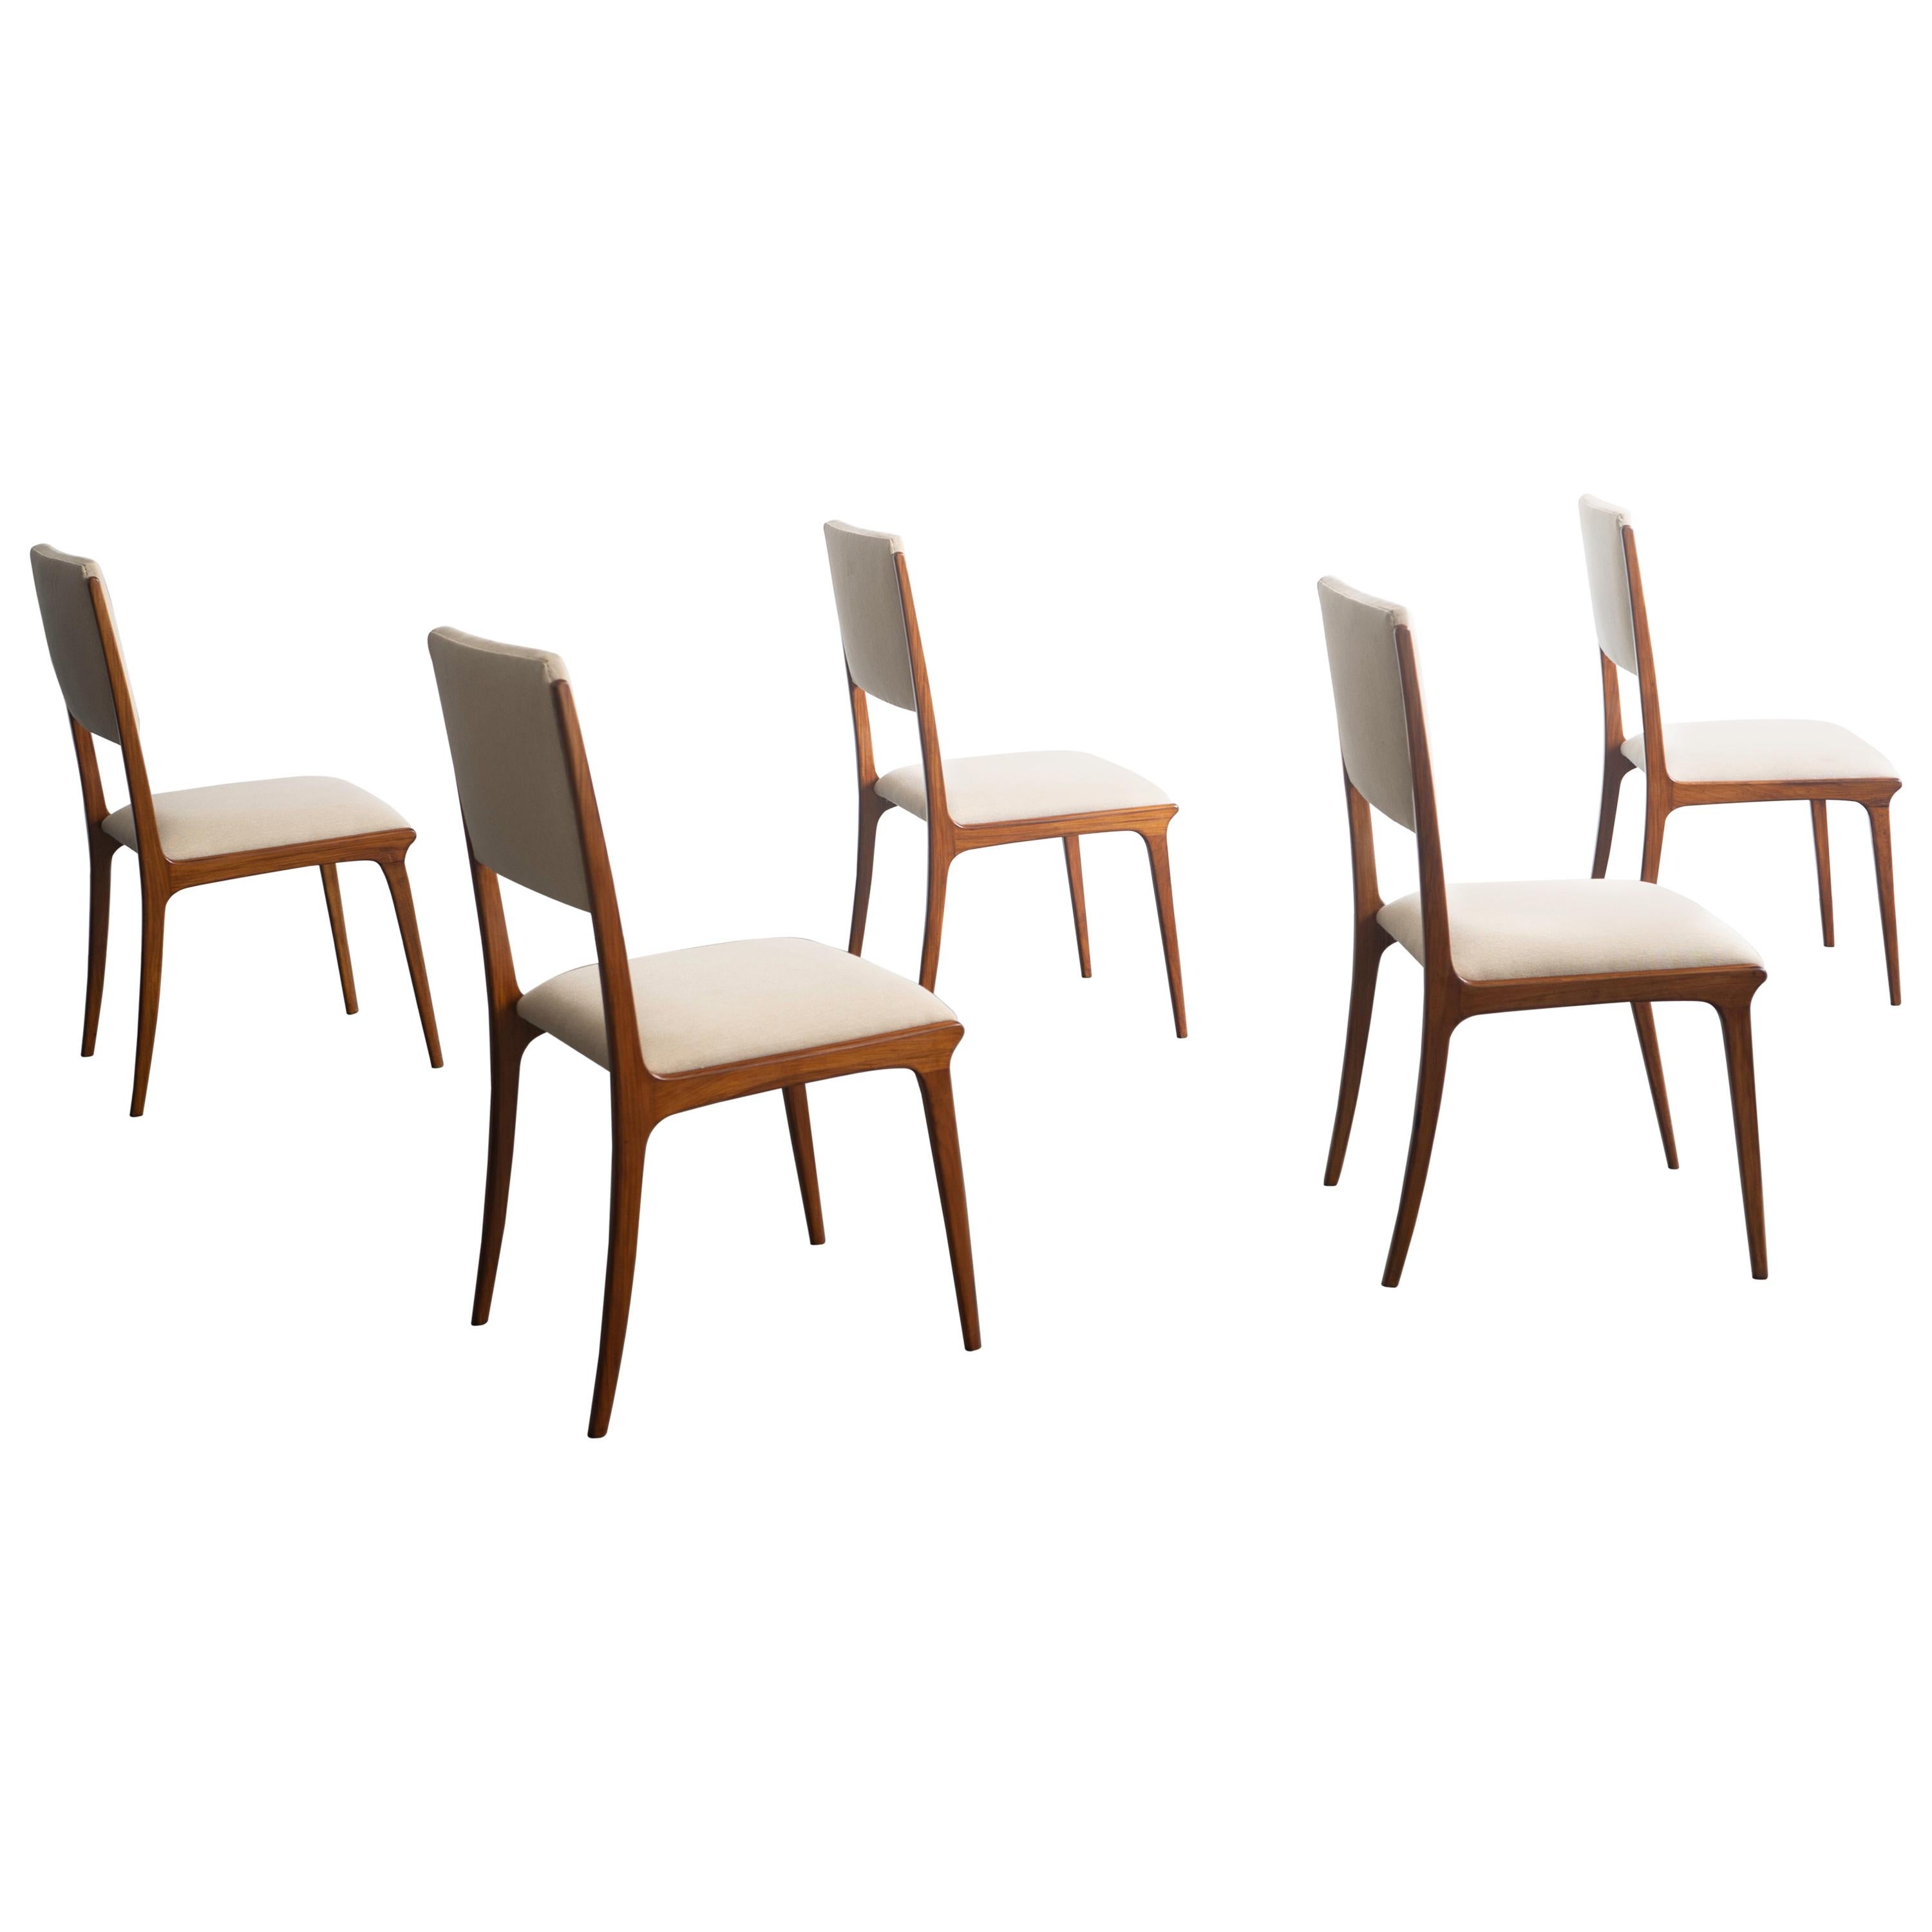 Set of Six Chairs by Carlo Hauner, Brazilian Design